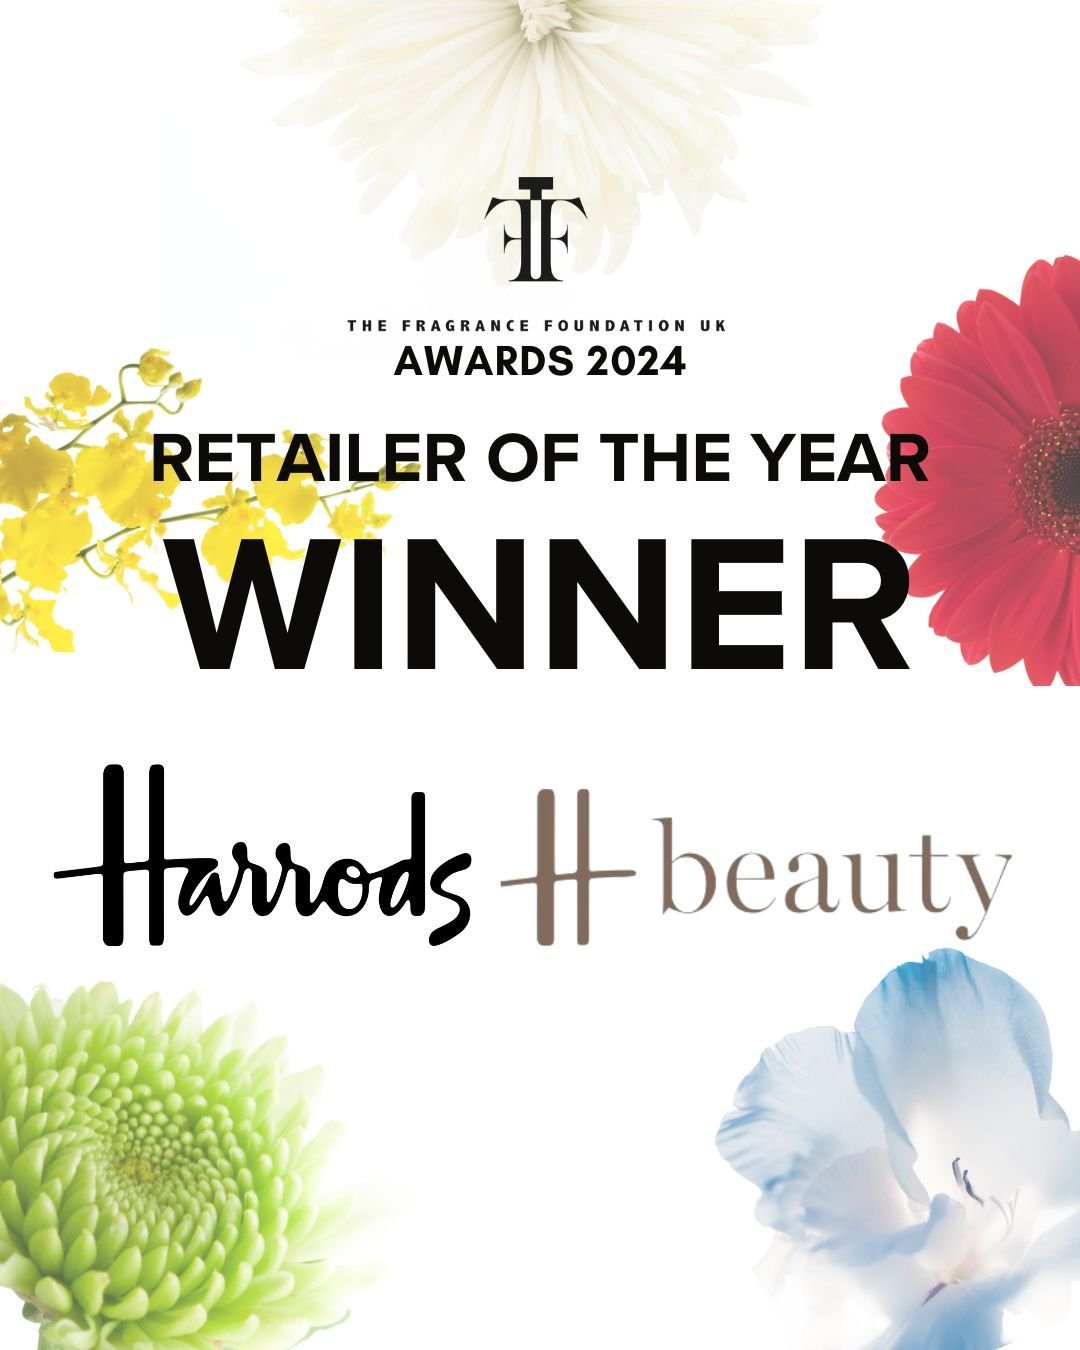 Winner of The Fragrance Foundation UK Retailer of the Year Award... 
@Harrods / @HarrodsBeauty! Congratulations!

#TFFAwards2024 #Winner #FragranceAwards #Fragrance #FragranceLover #FragranceCelebration